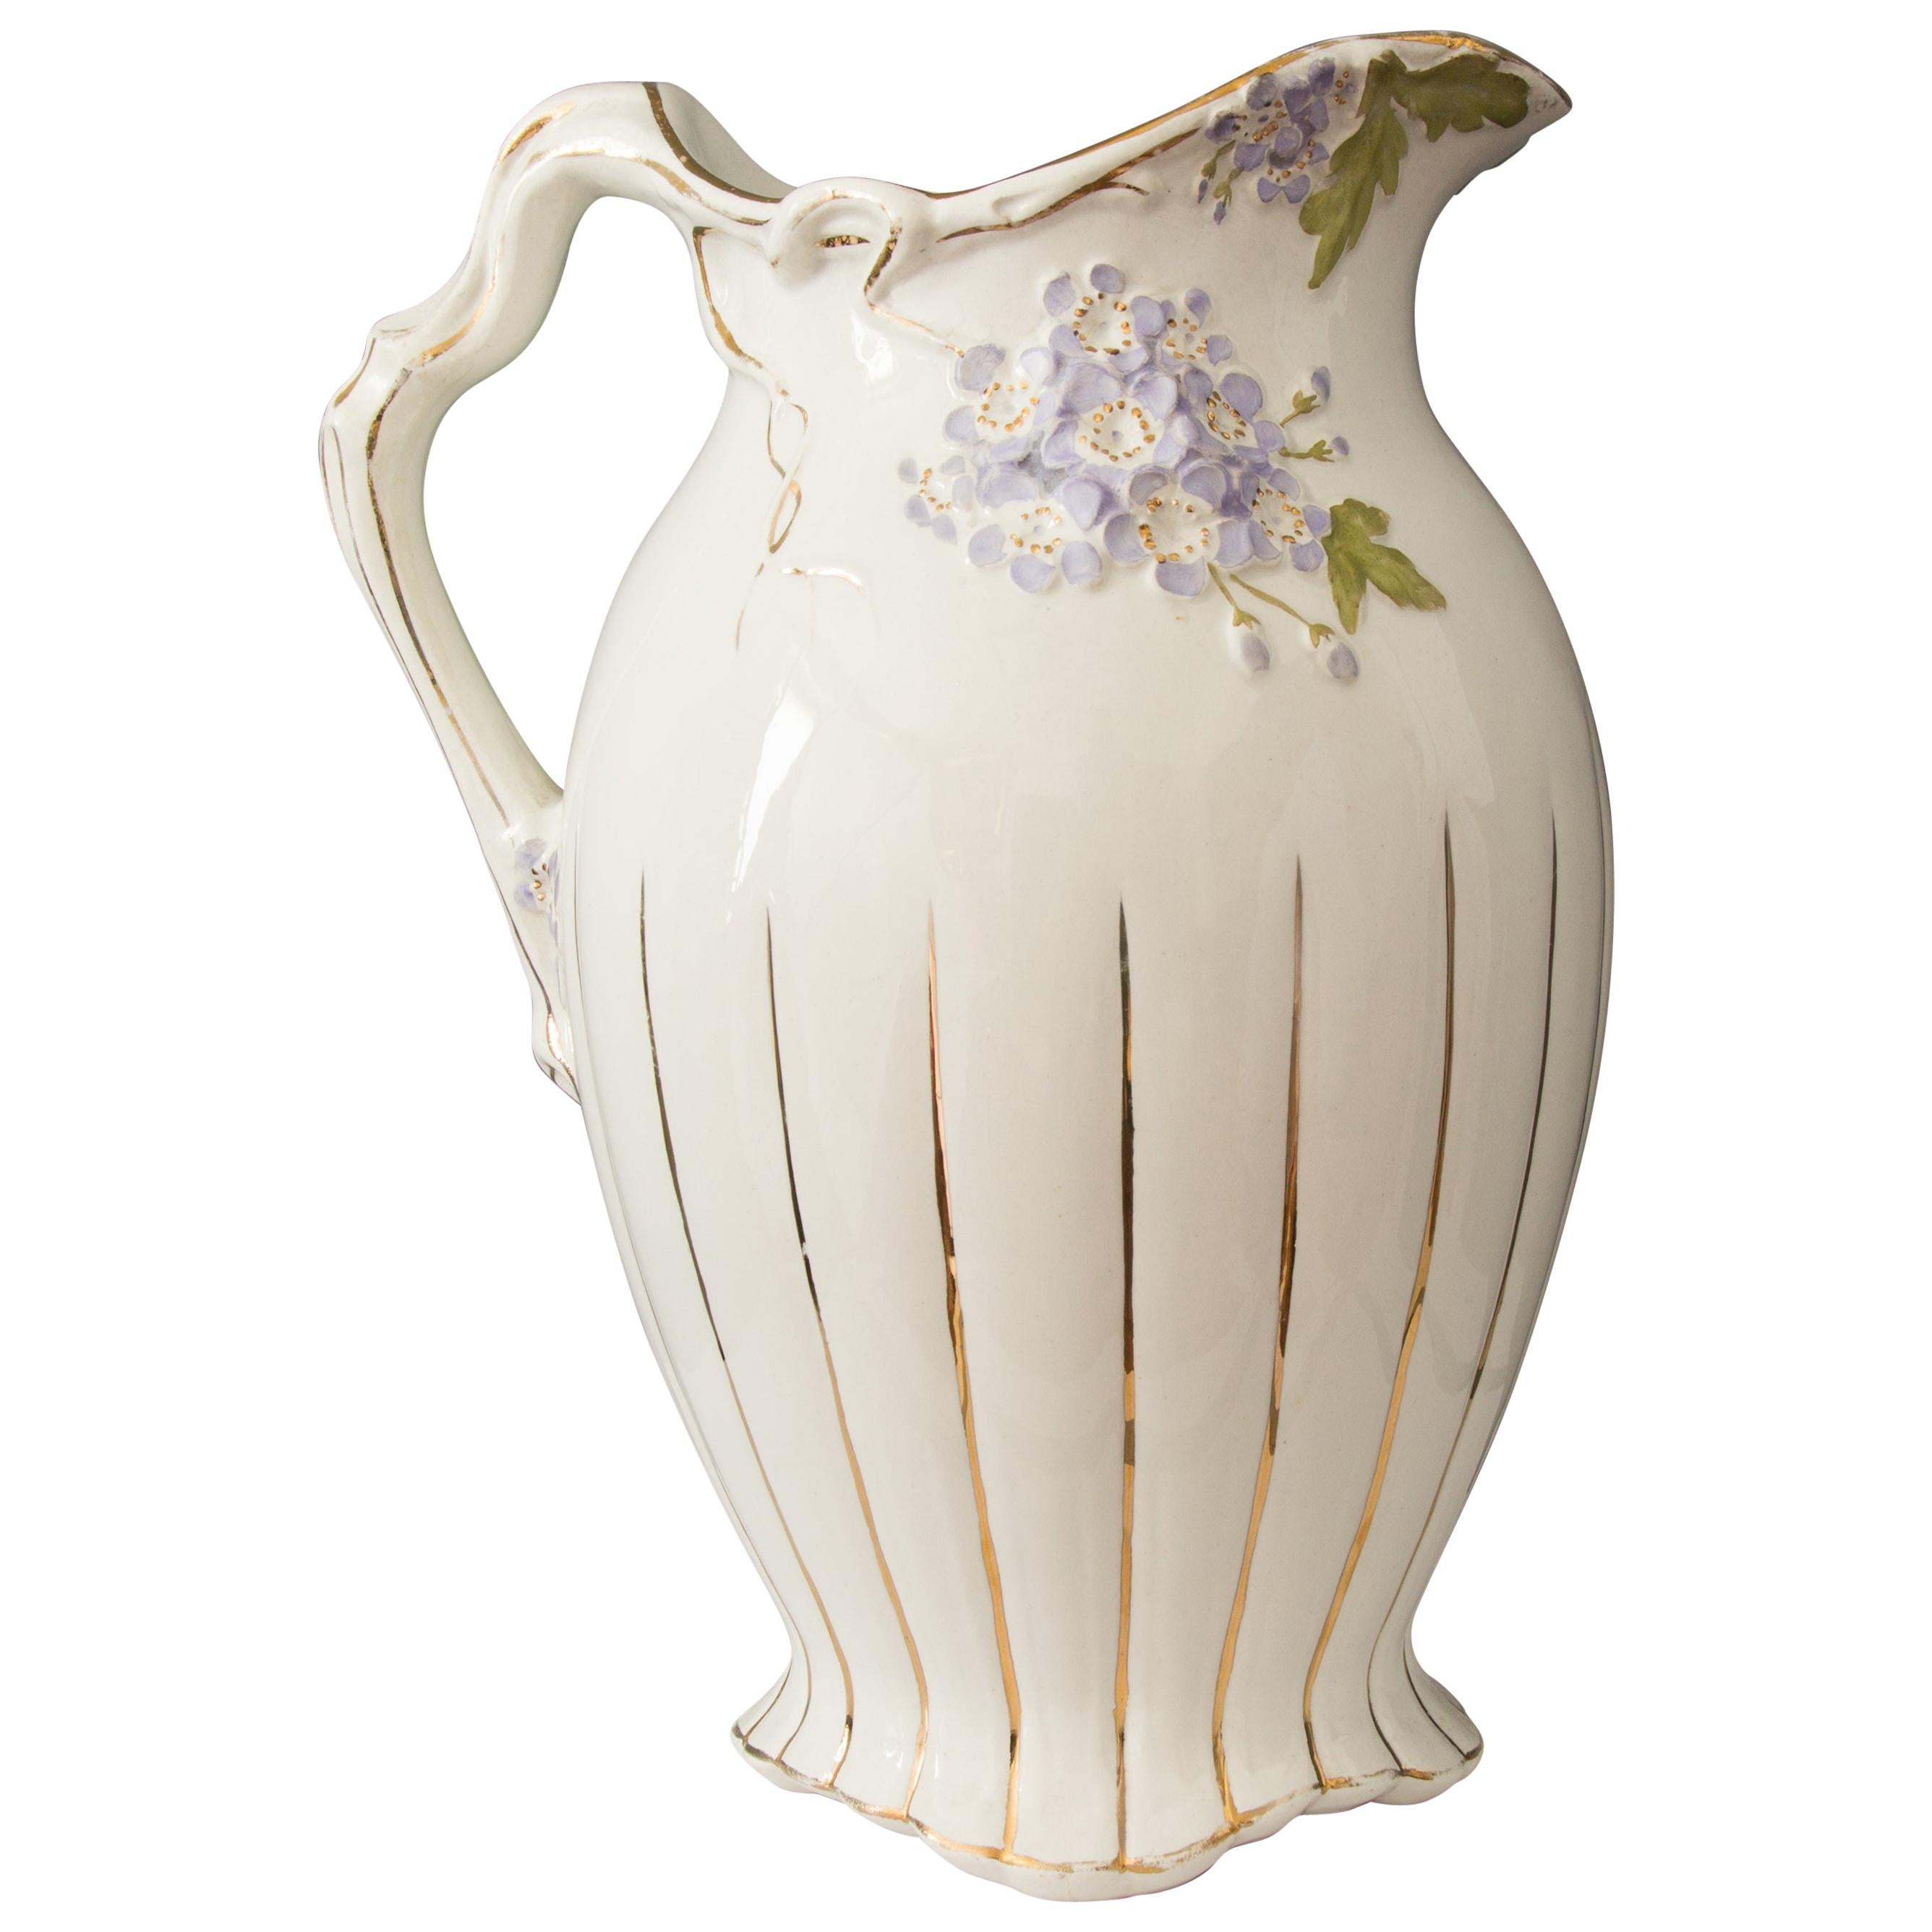 Art Nouveau Ceramic Jug or Vase